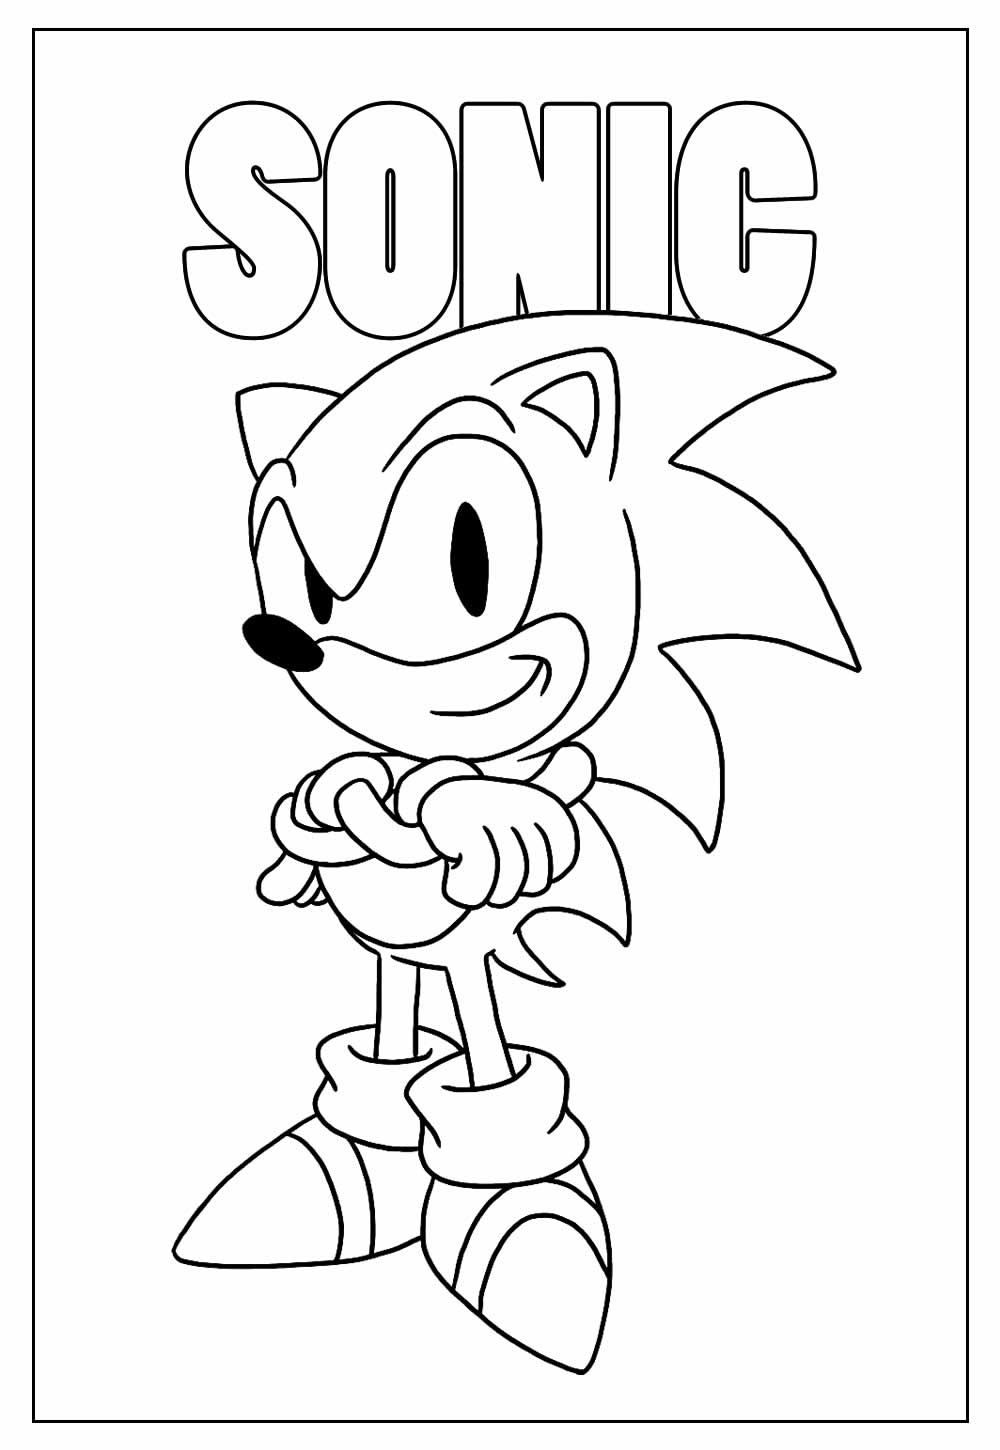 Desenho Educativo de Sonic para colorir